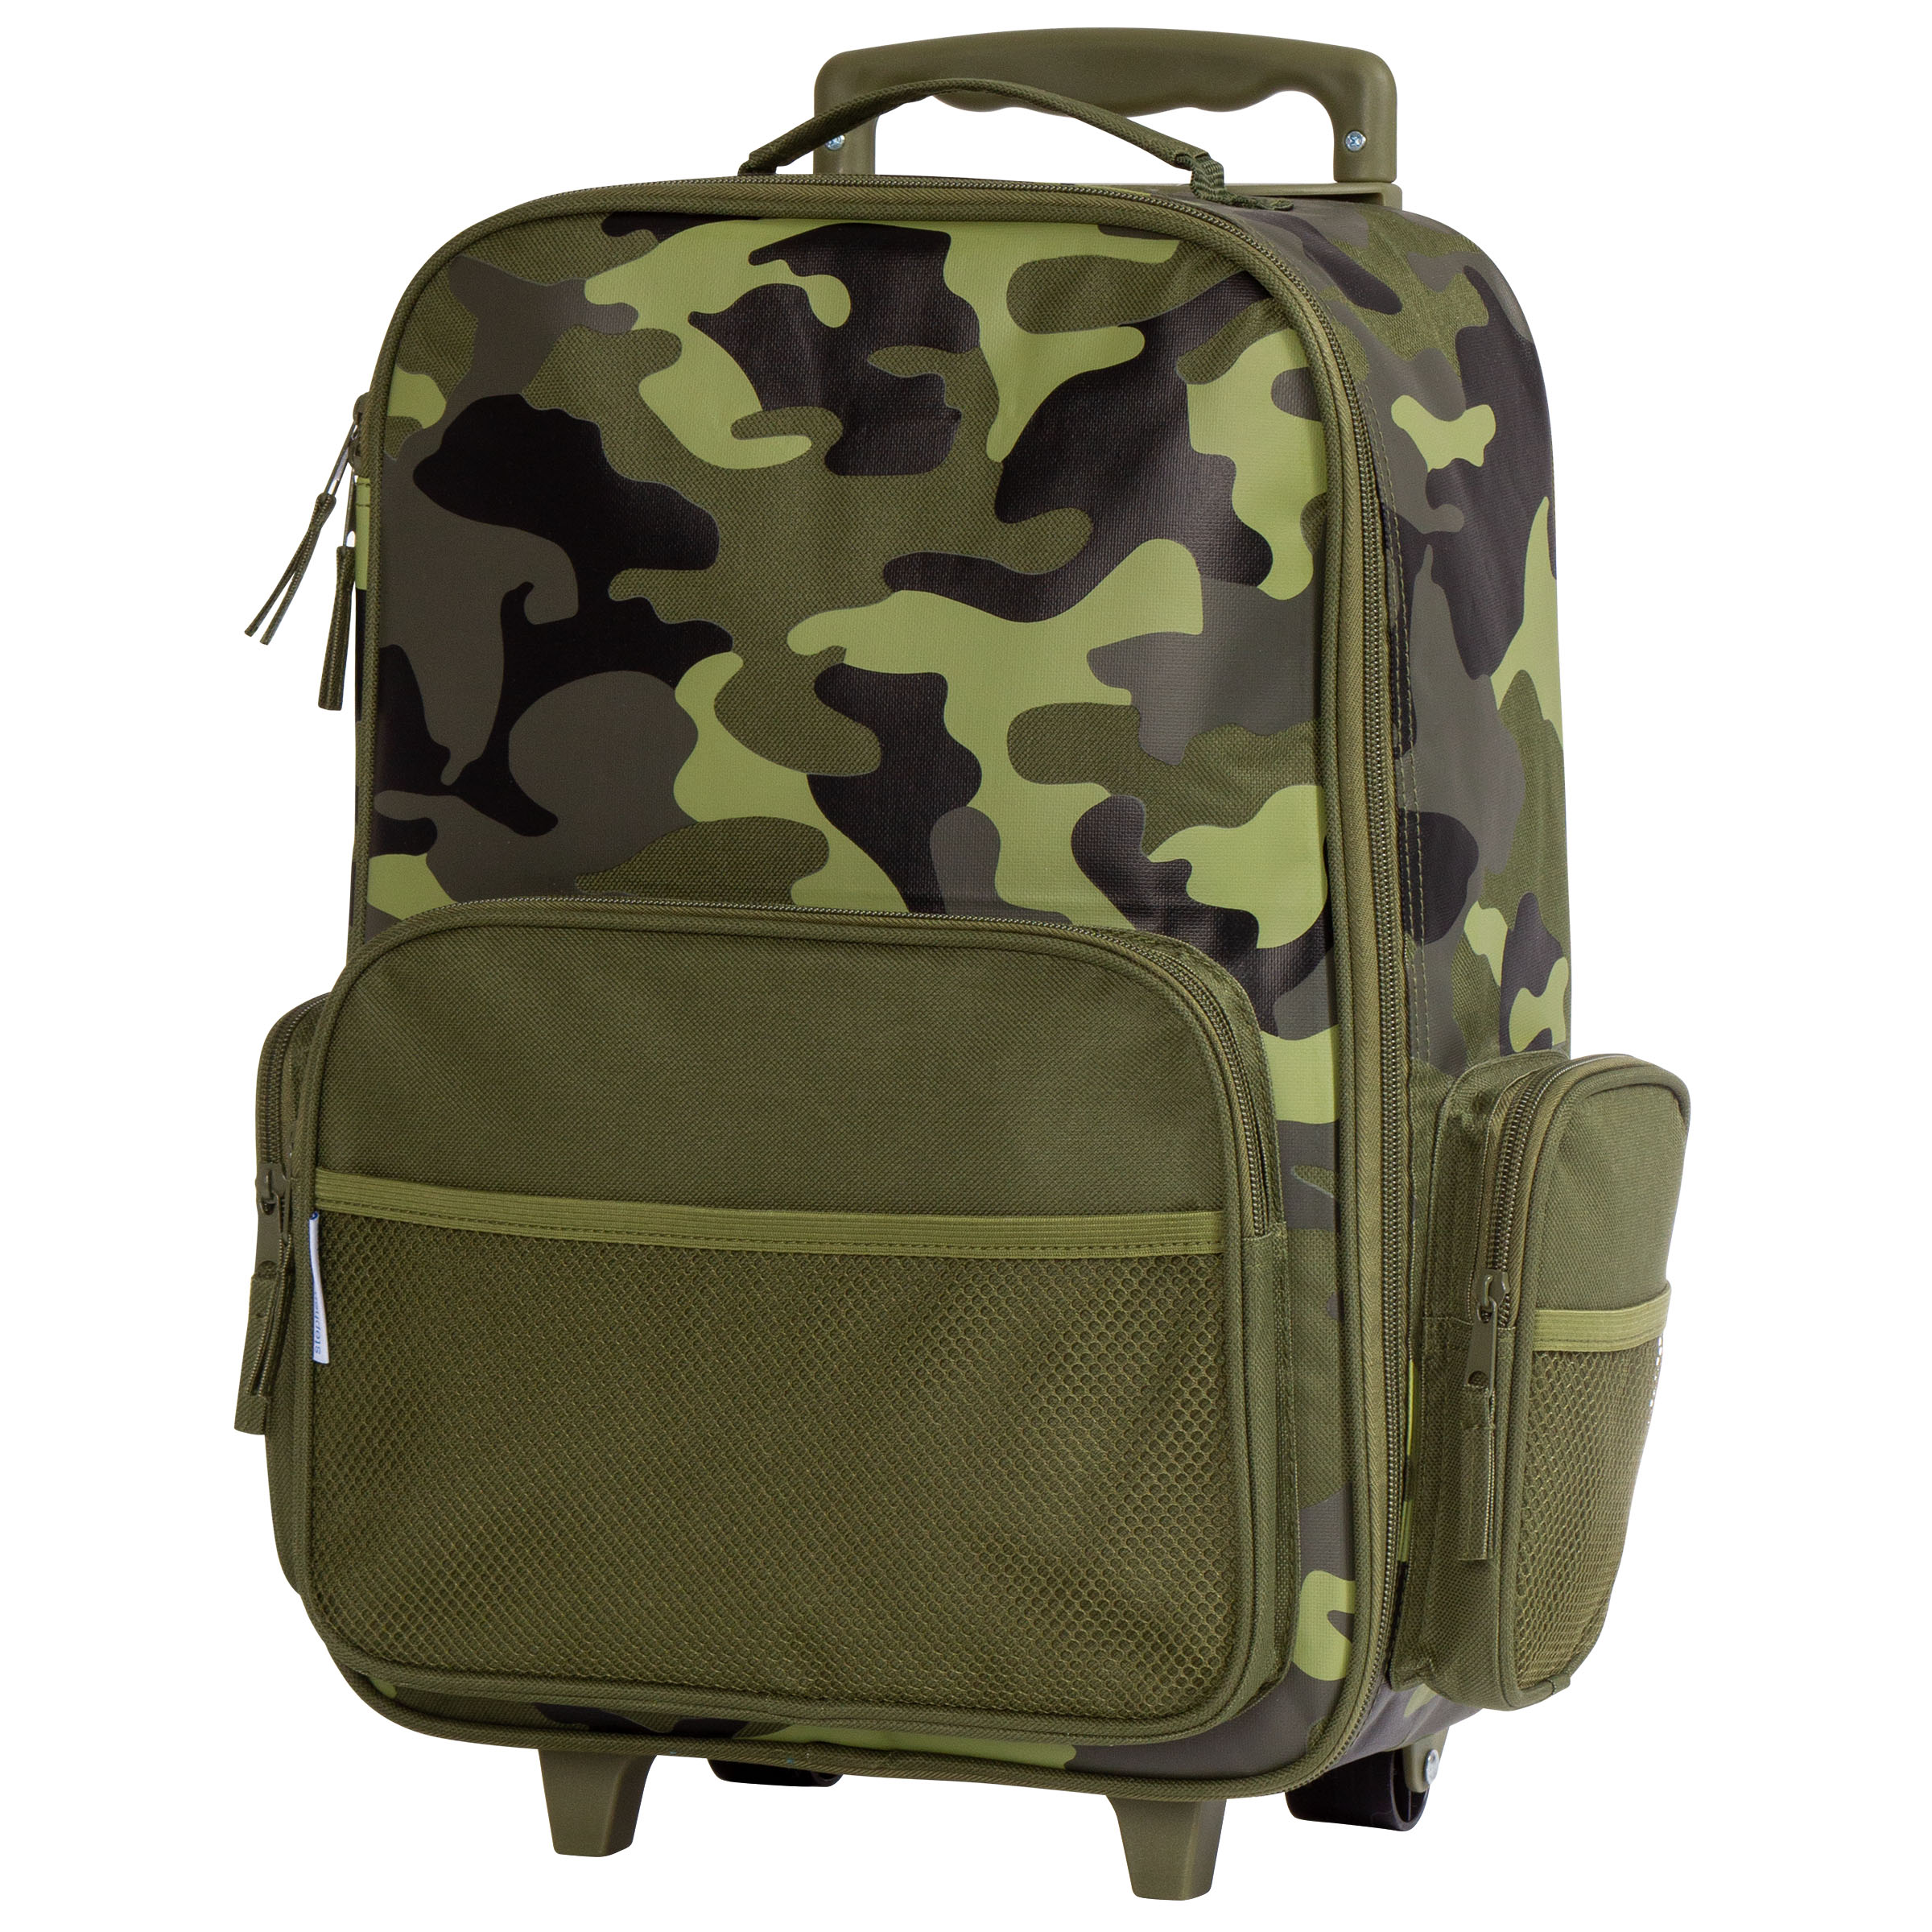 Preschool Backpack CAMO Backpack  Stephen Joseph Backpack Camouflage Backpack Personalized Boys  Backpack